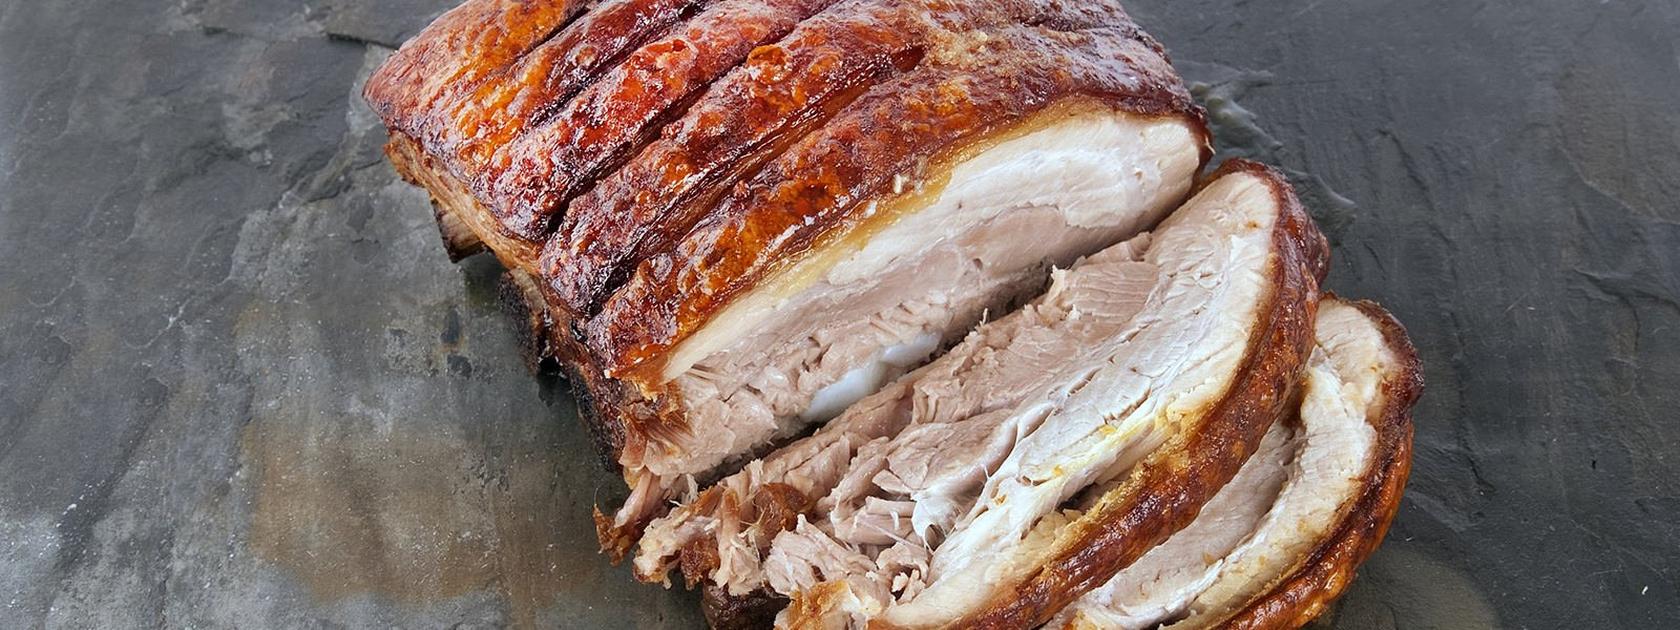 12 Grilled Pork Loin Recipes